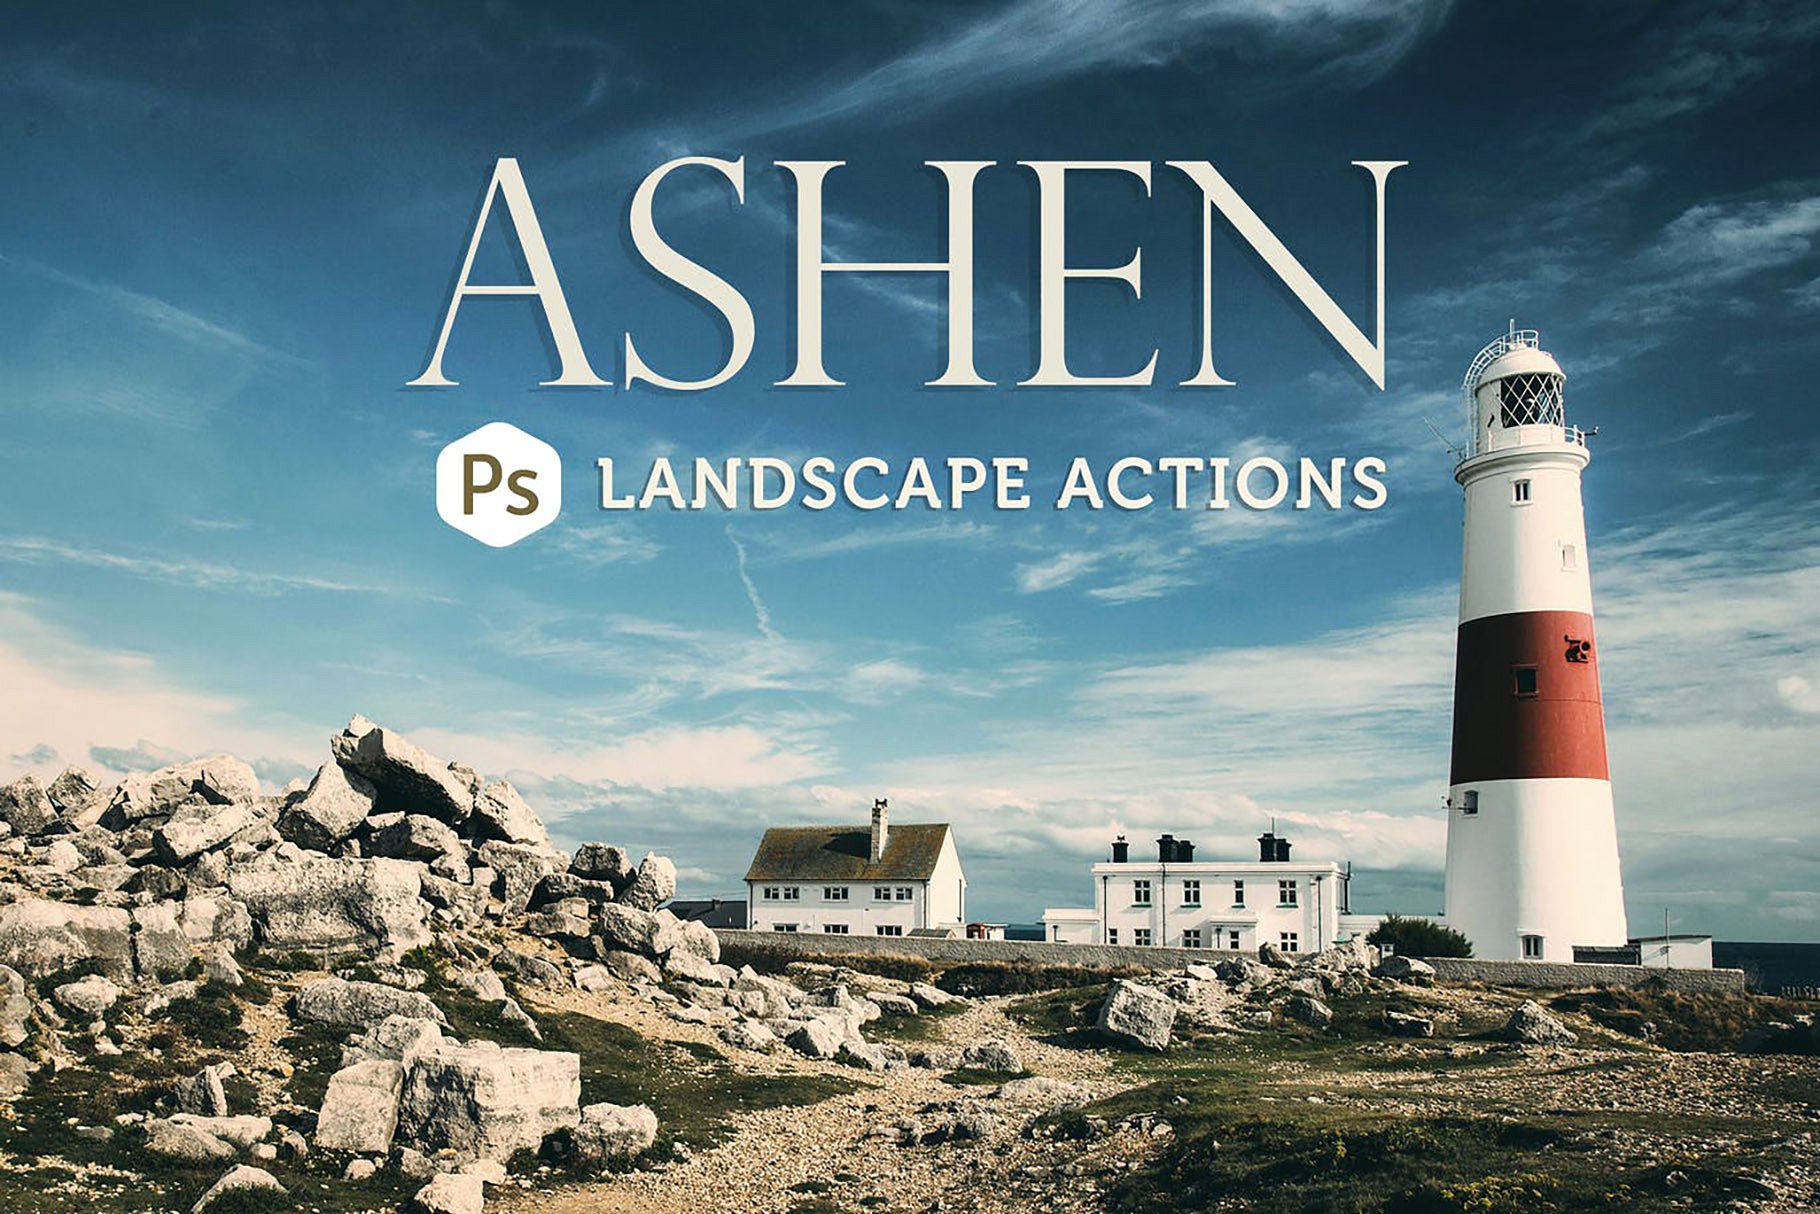 Ashen Landscape Actions for PS